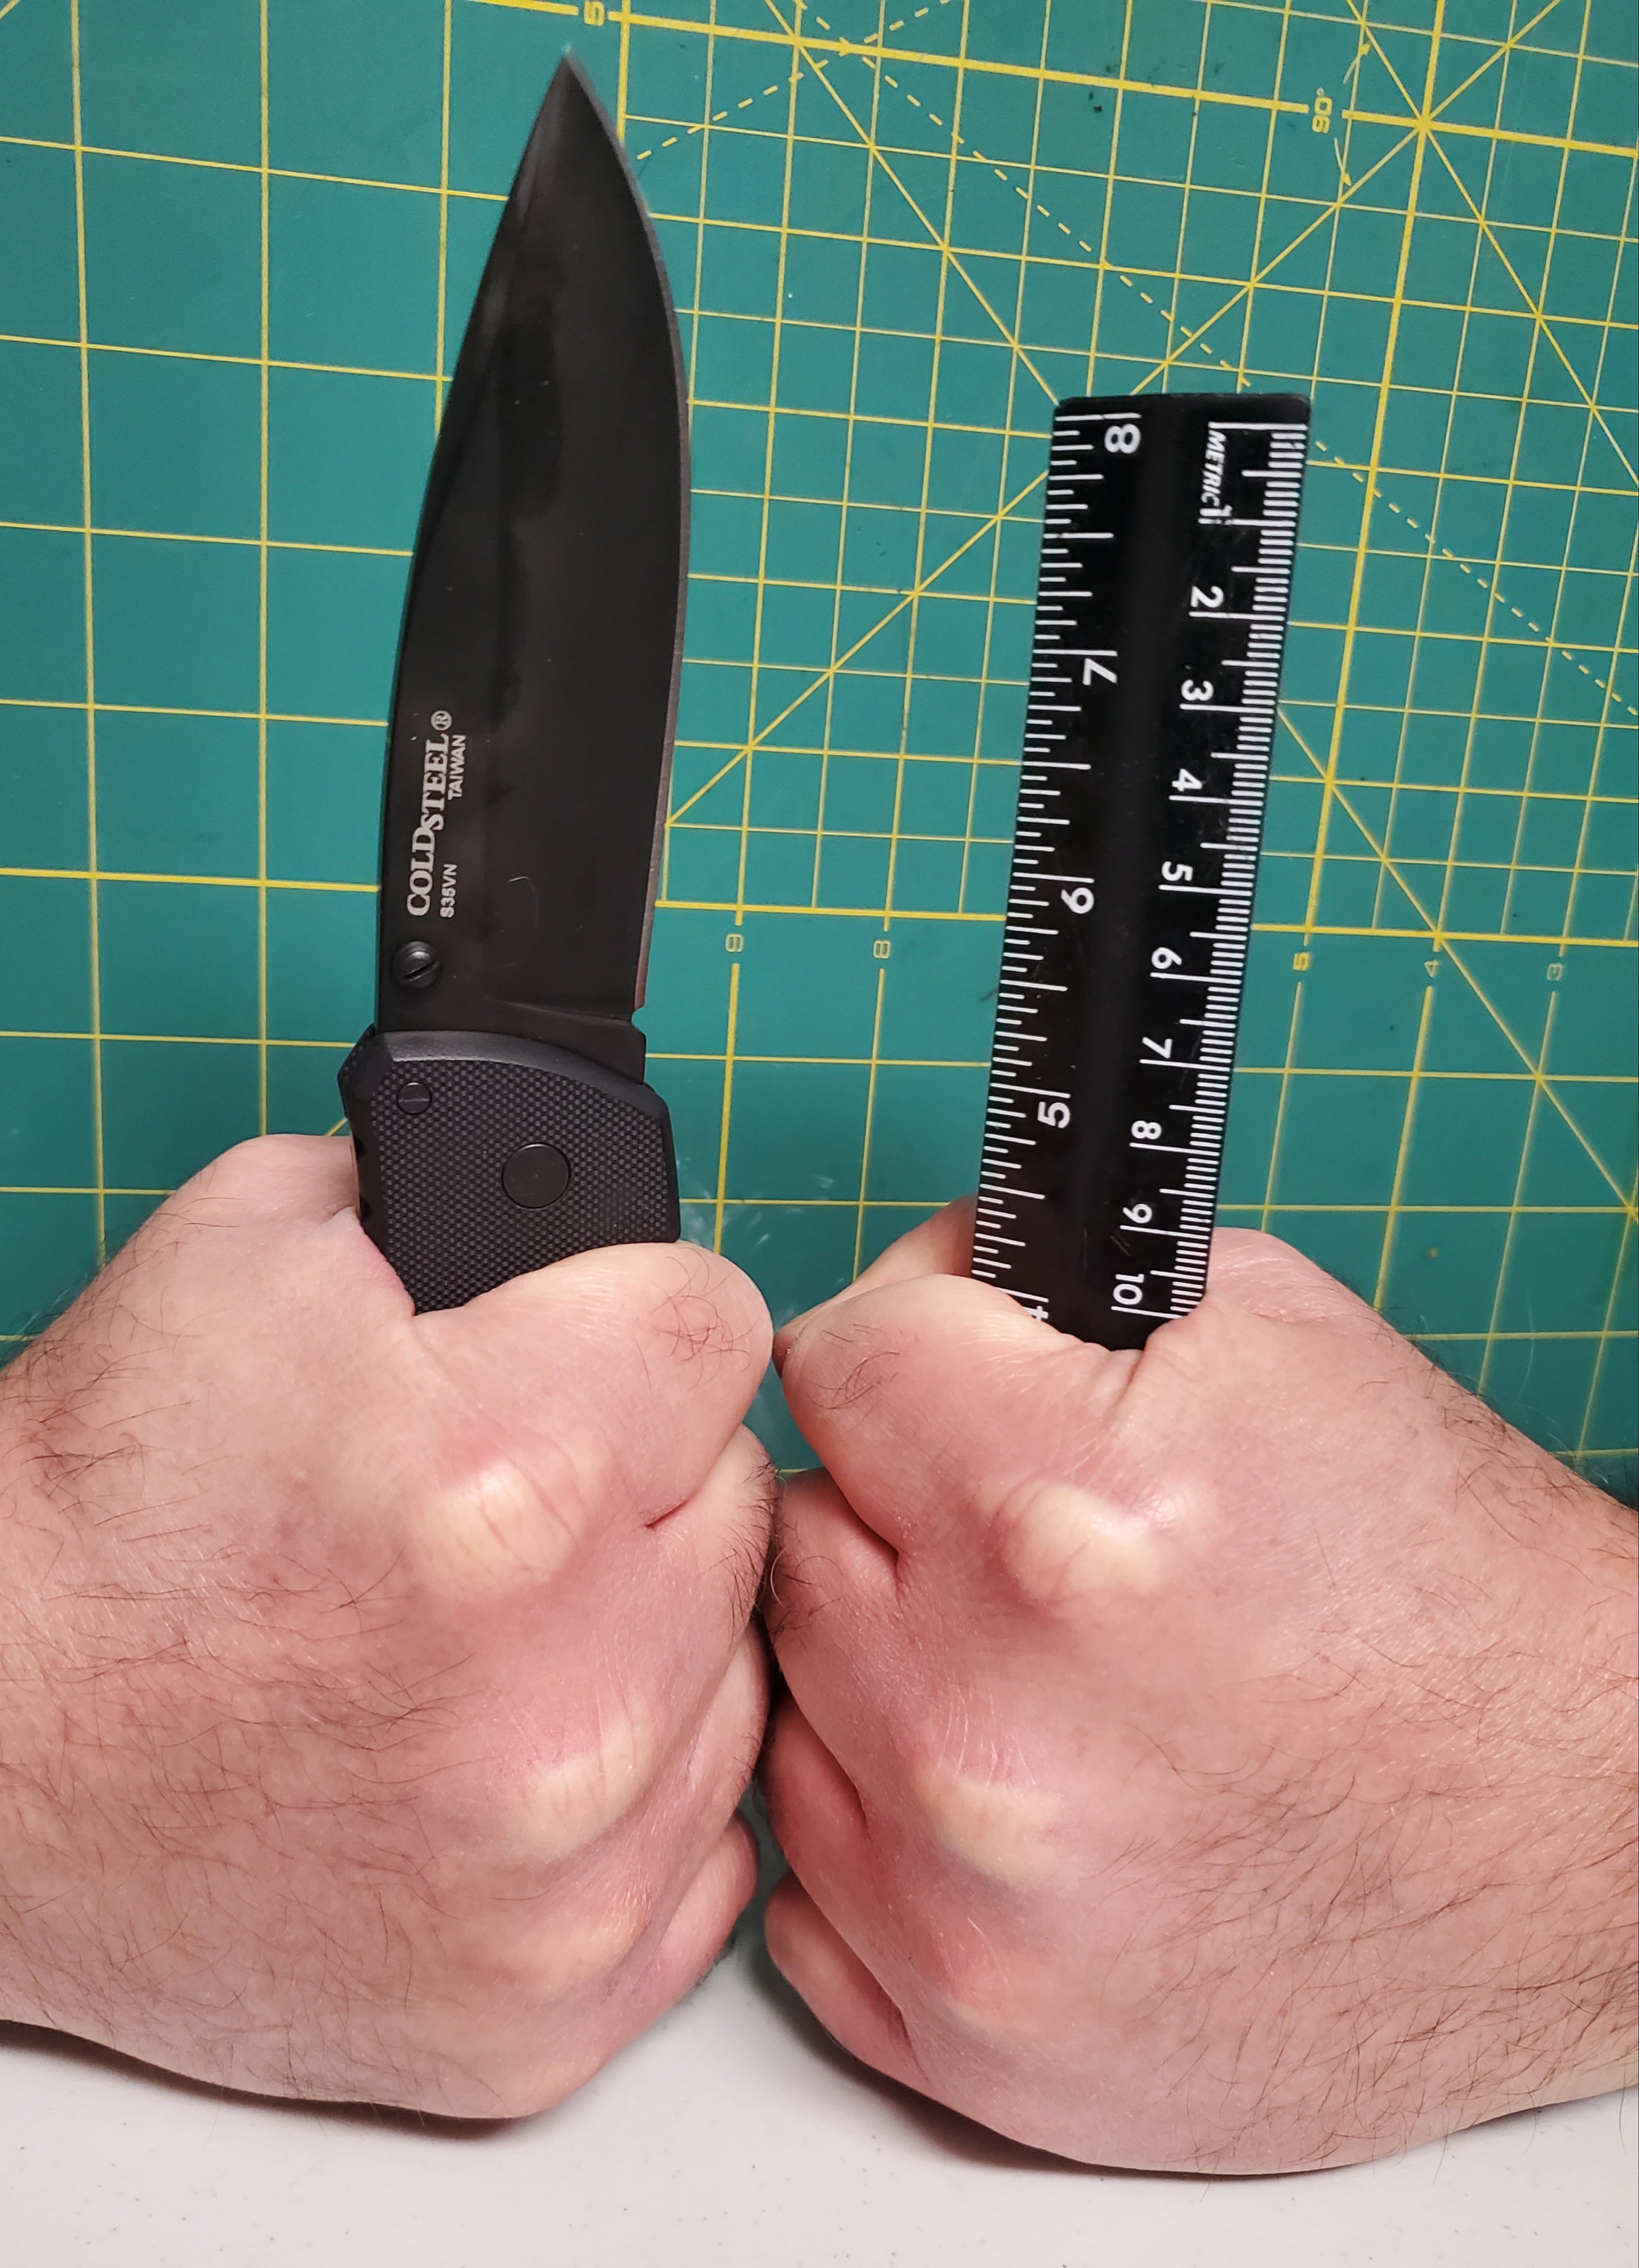 4 Inch Small Pocket Machete knife